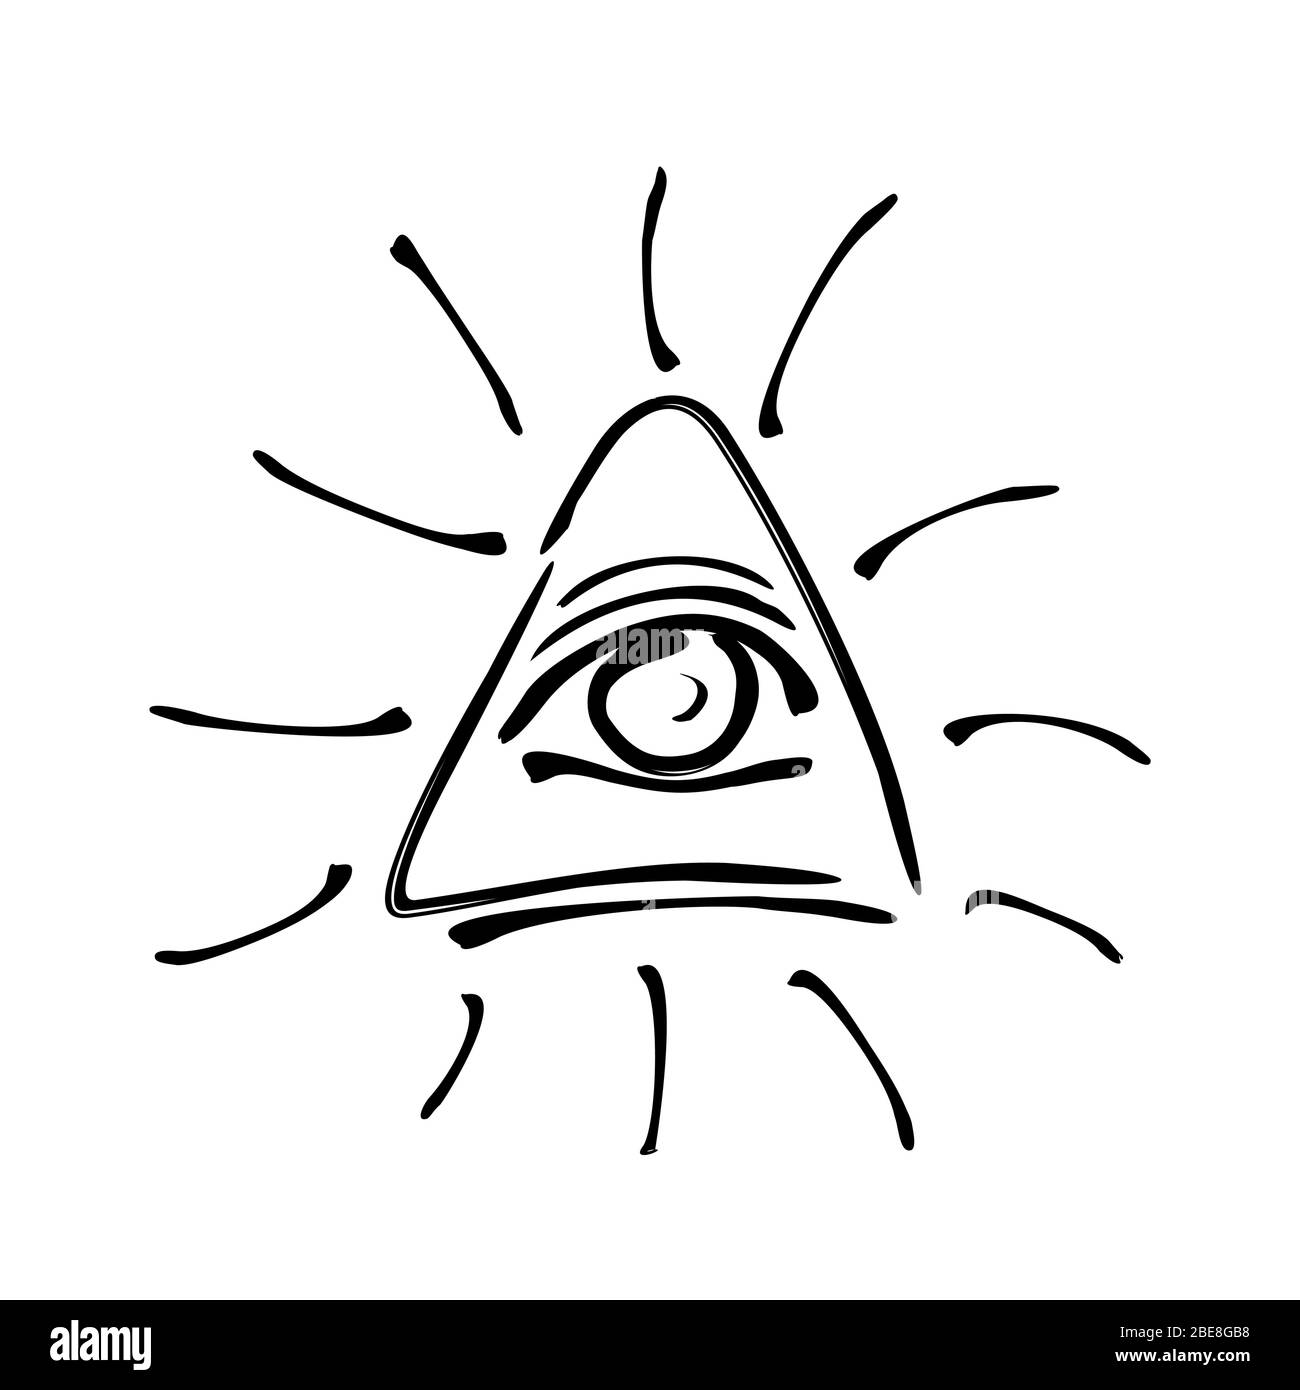 https://c8.alamy.com/comp/2BE8GB8/vector-all-seeing-eye-eye-inside-the-triangle-2BE8GB8.jpg